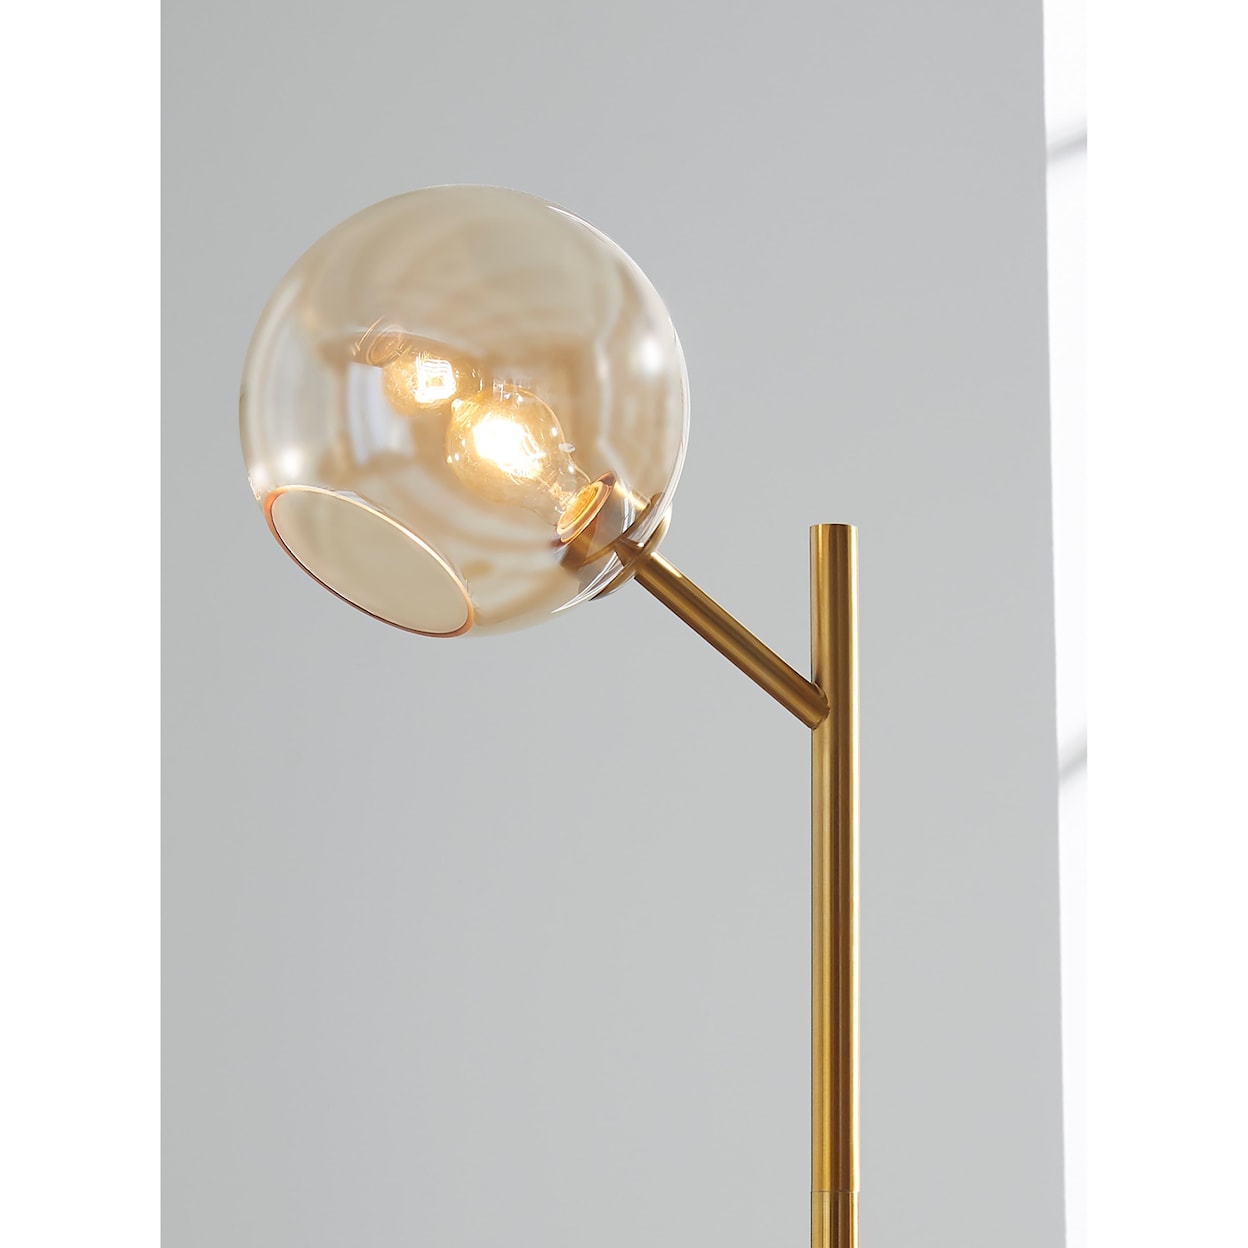 Ashley Signature Design Lamps - Contemporary Abanson Gold Finish Metal Floor Lamp